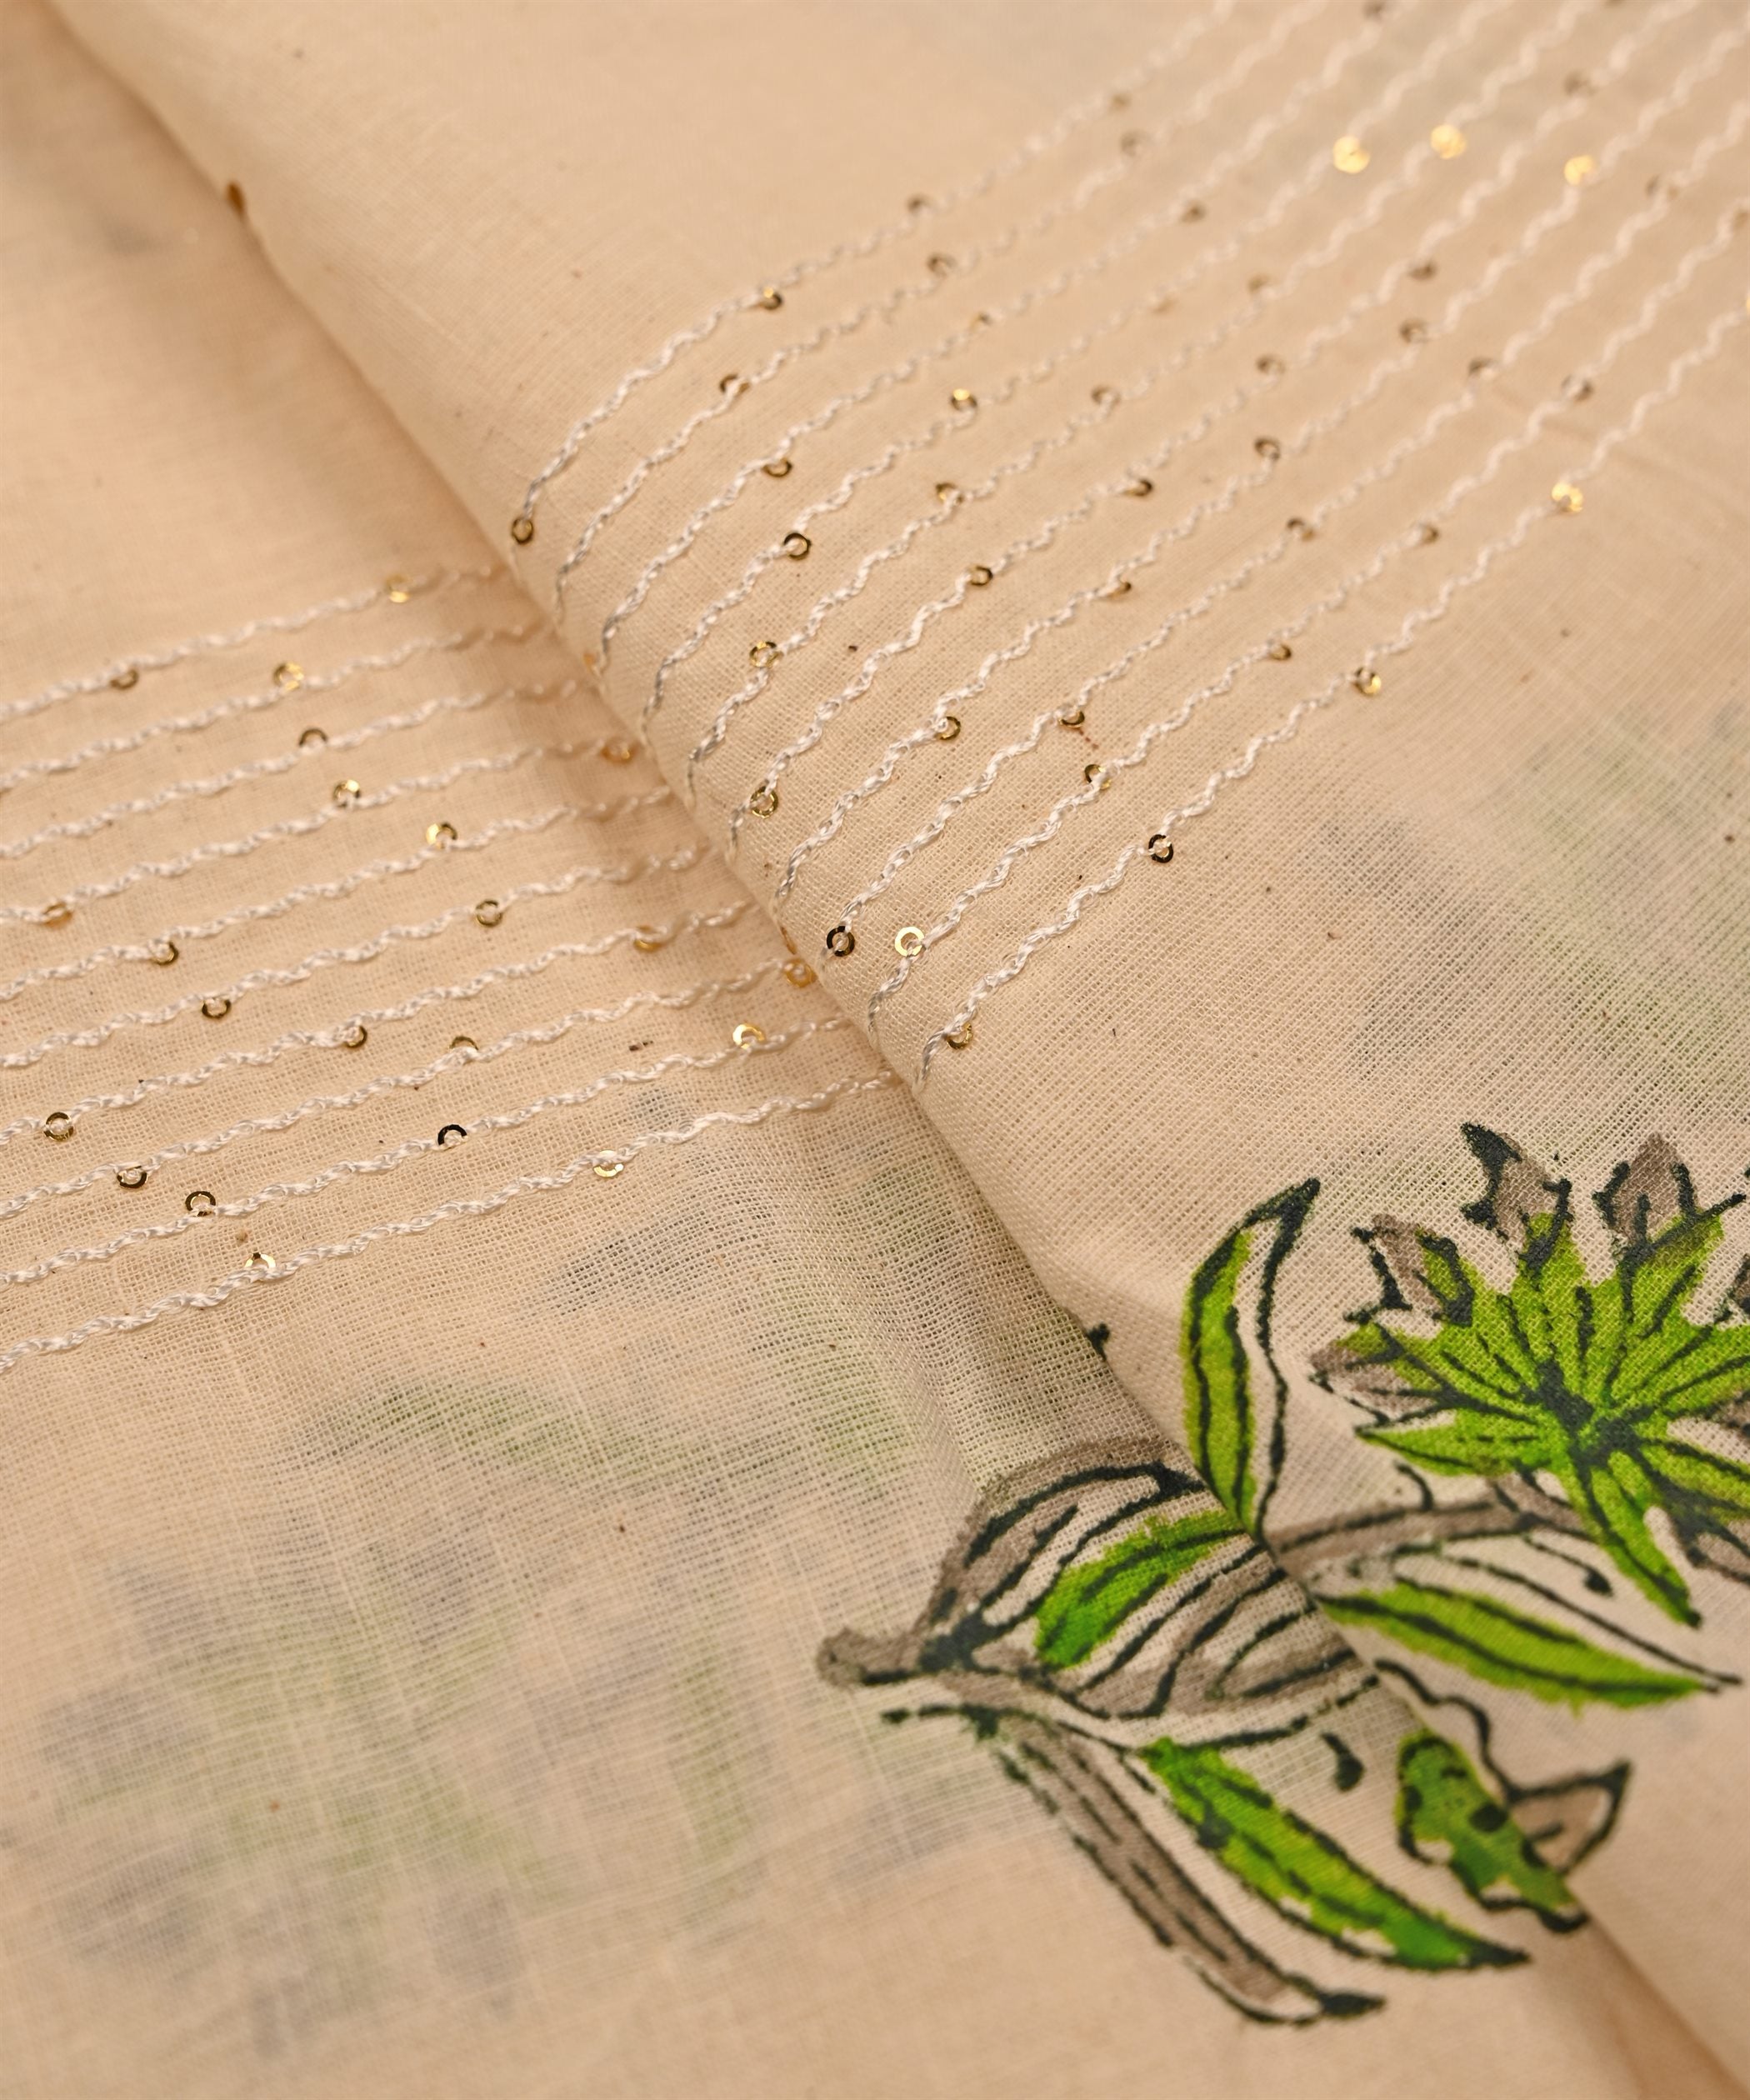 Embroidered Green batik Handblock printed Mal Cotton fabric with mirror work